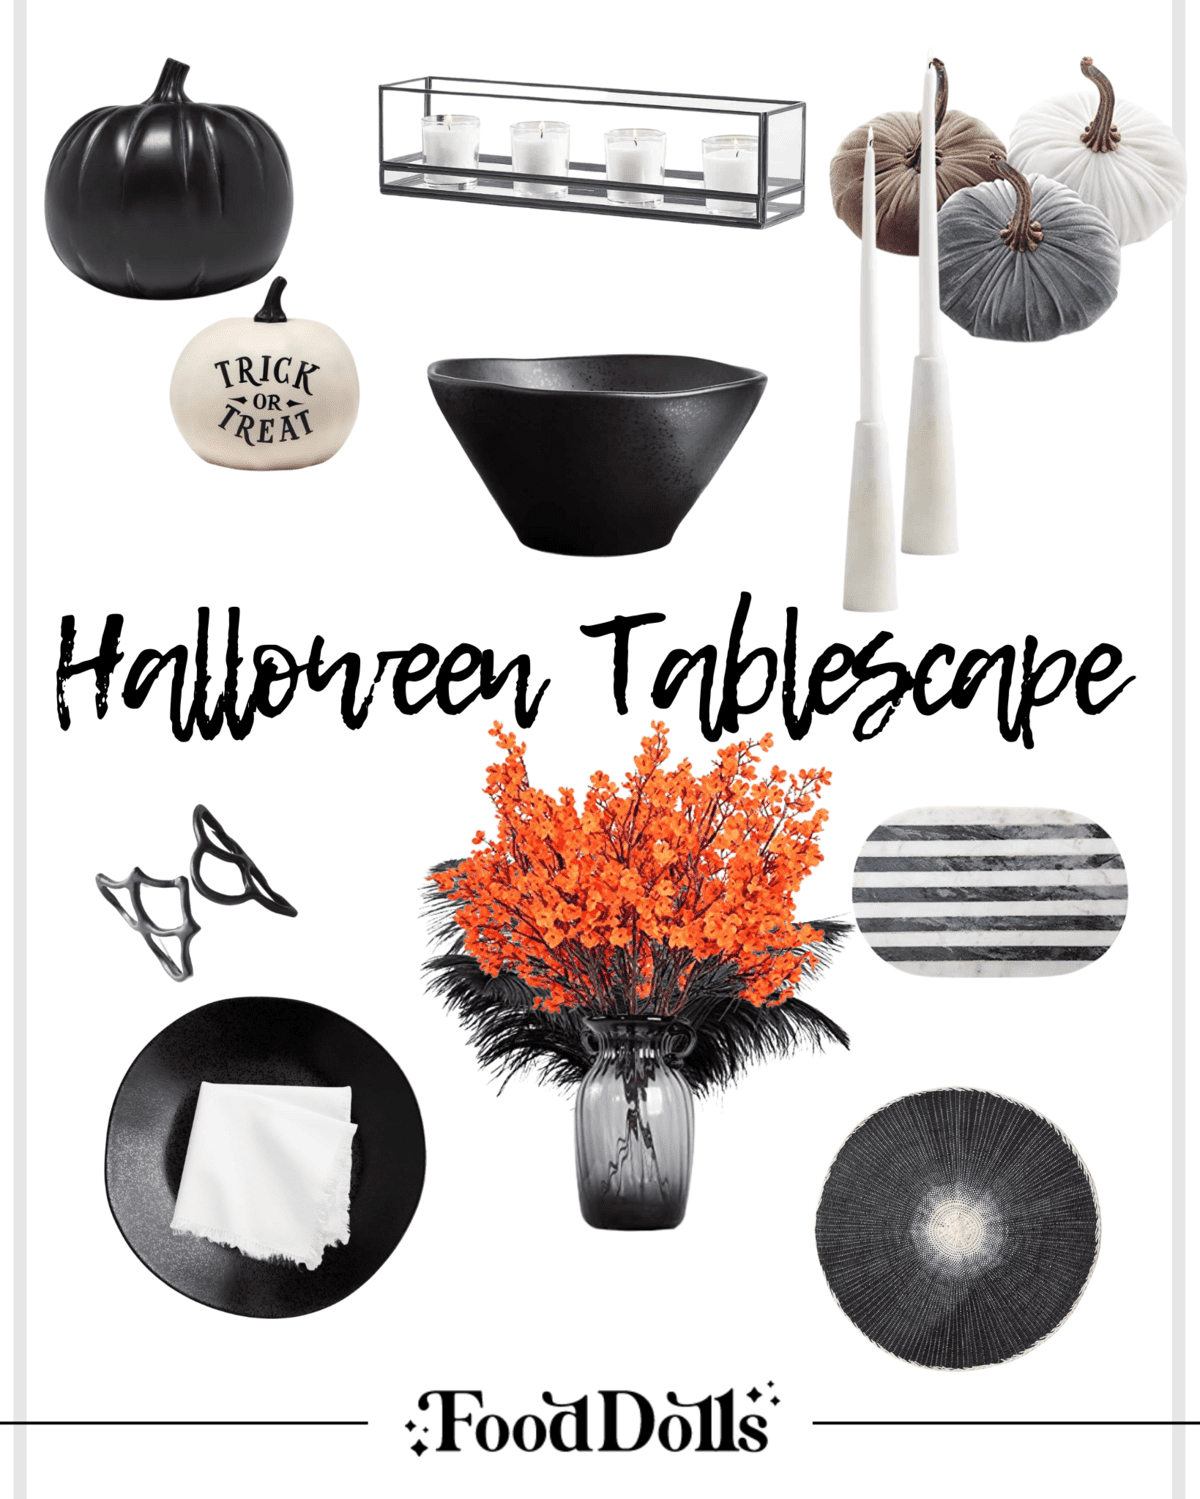 Halloween tablescape Pinterest image